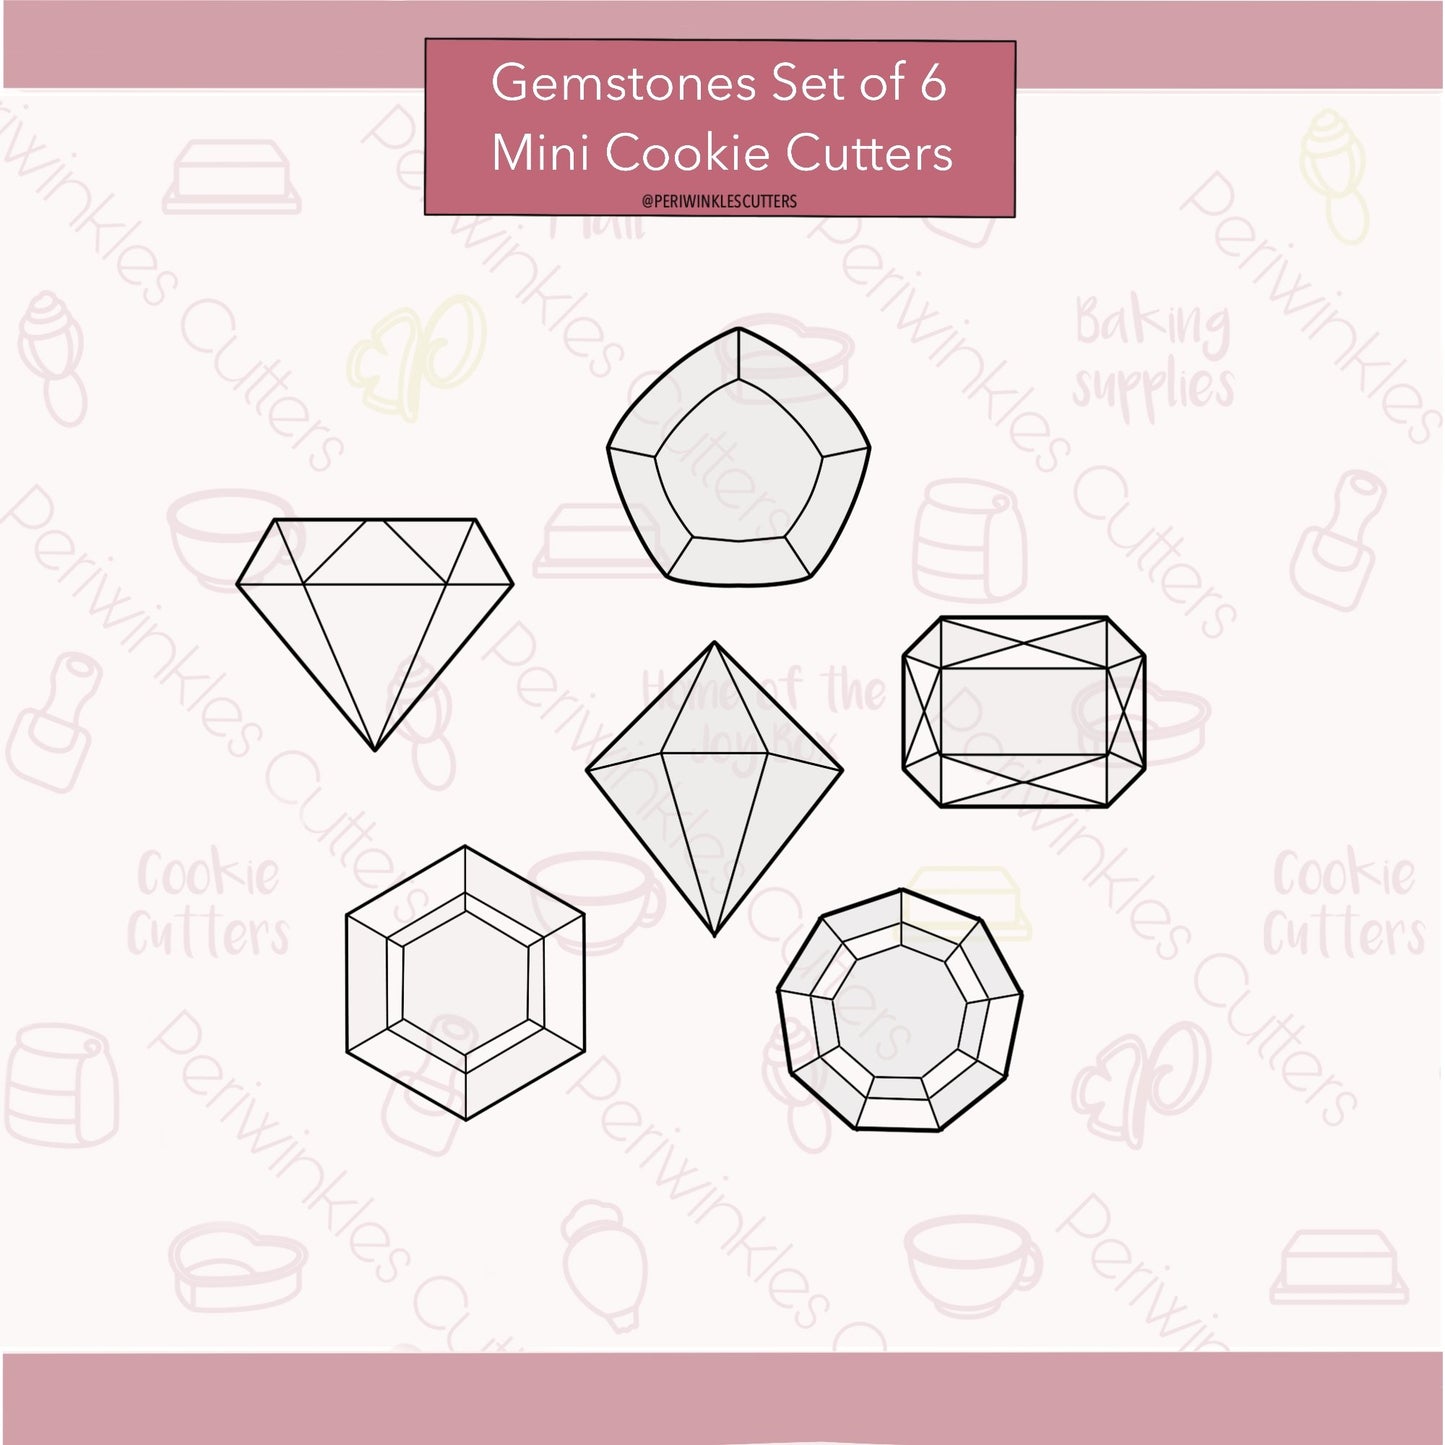 Gemstones Set of 6 mini Cookie Cutters - Periwinkles Cutters